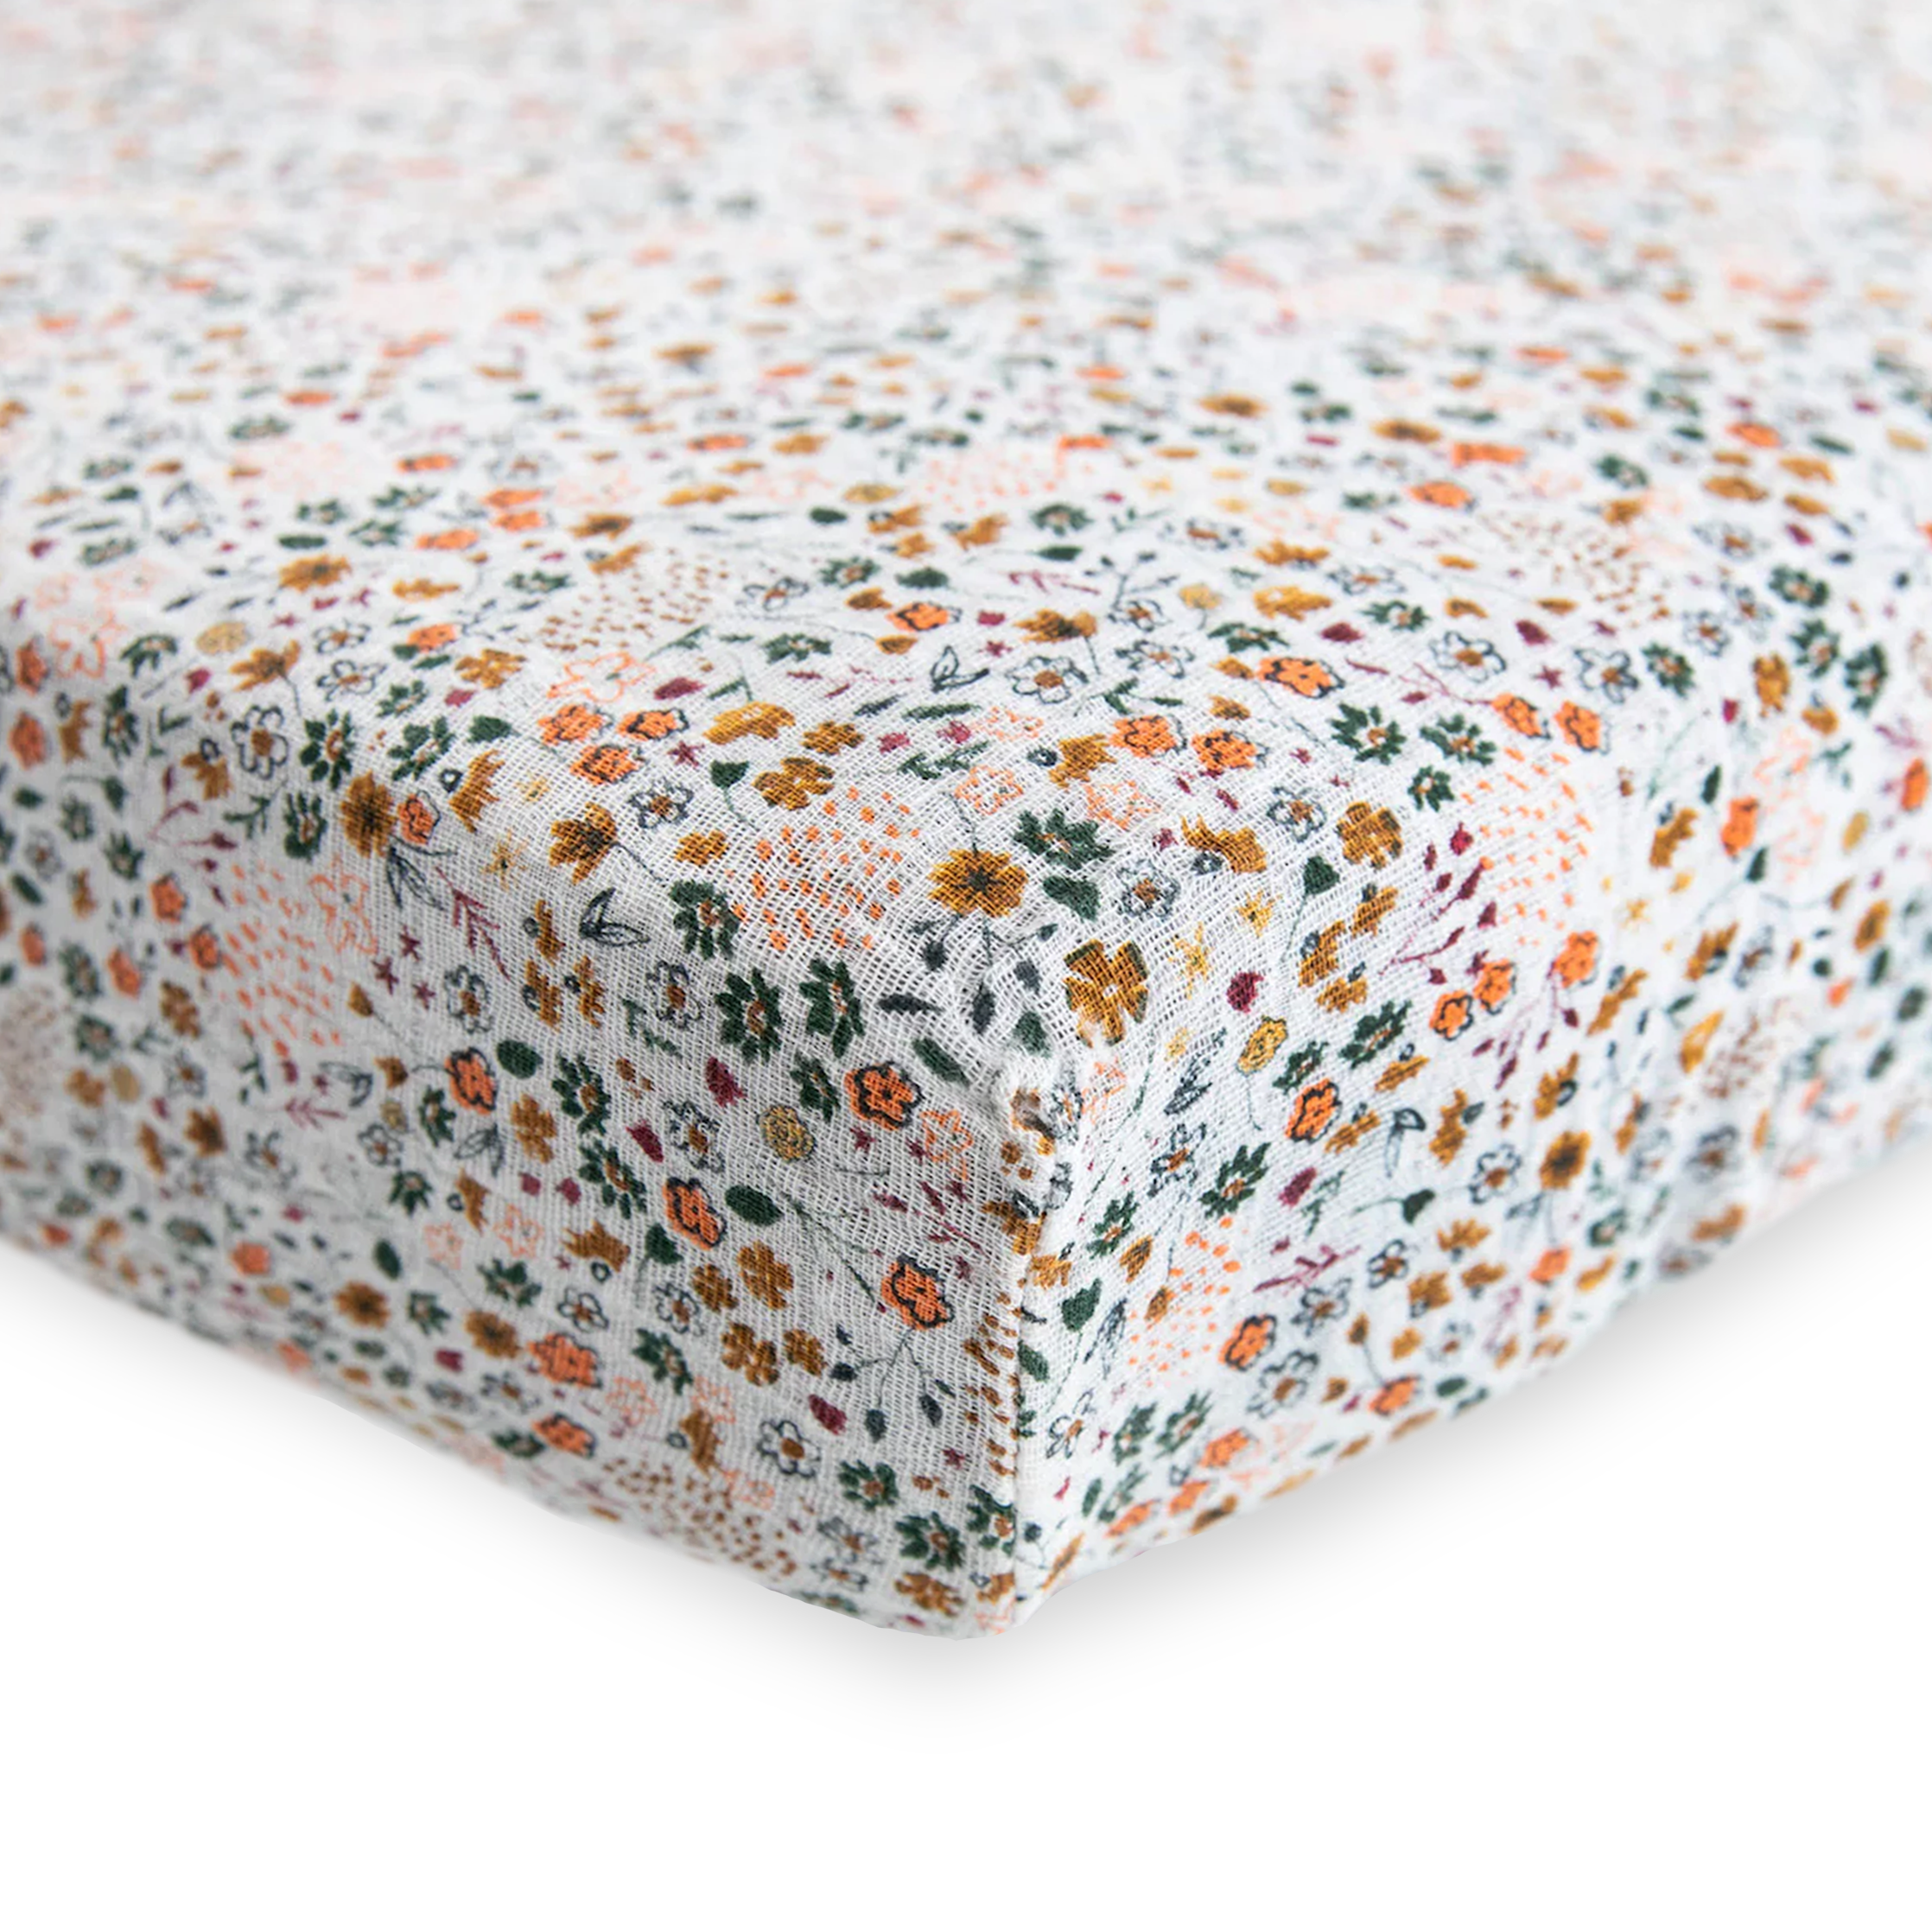 Cotton Muslin Crib Sheet - Pressed Petals